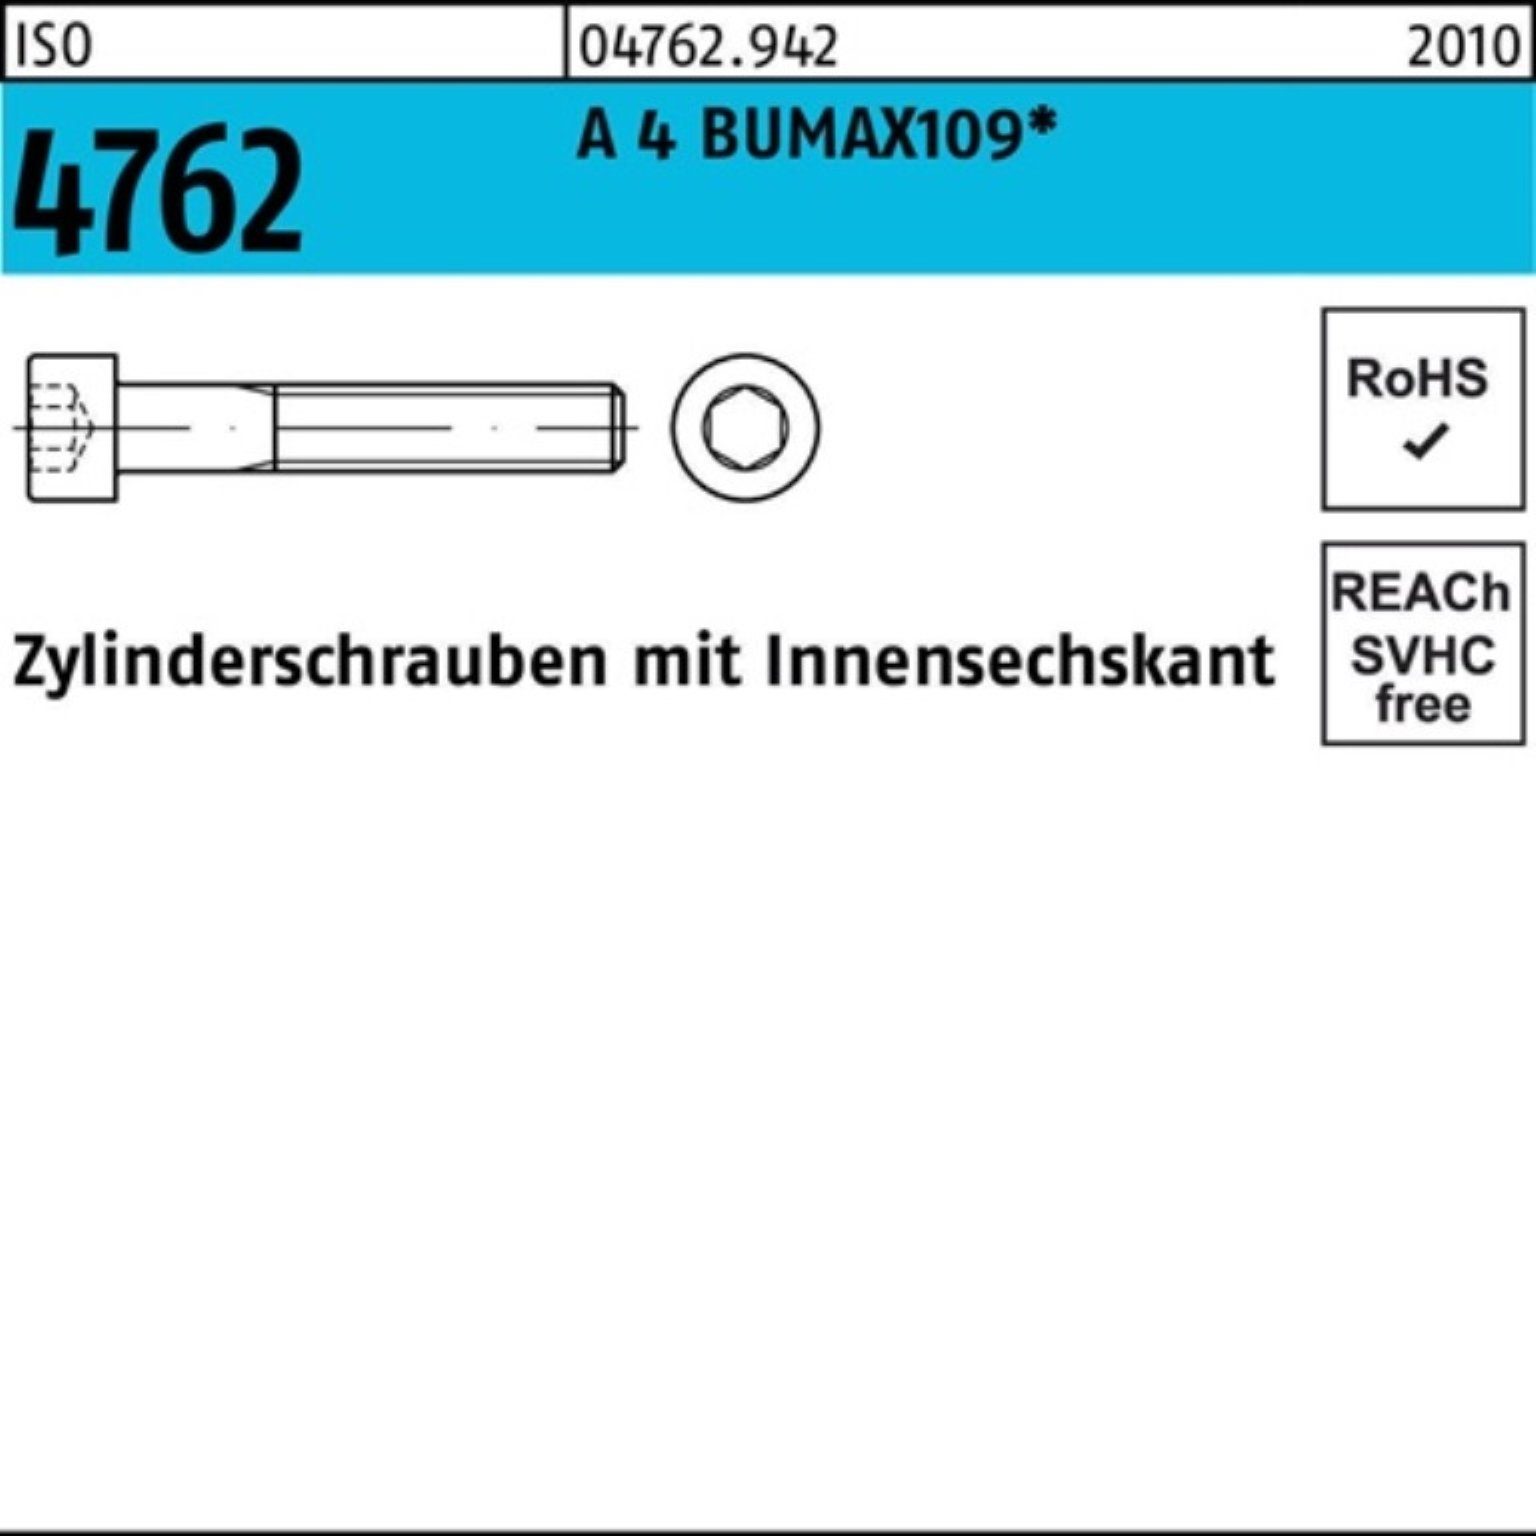 Bufab Zylinderschraube 100er Pack Zylinderschraube ISO 4762 Innen-6kt M6x 30 A 4 BUMAX109 100